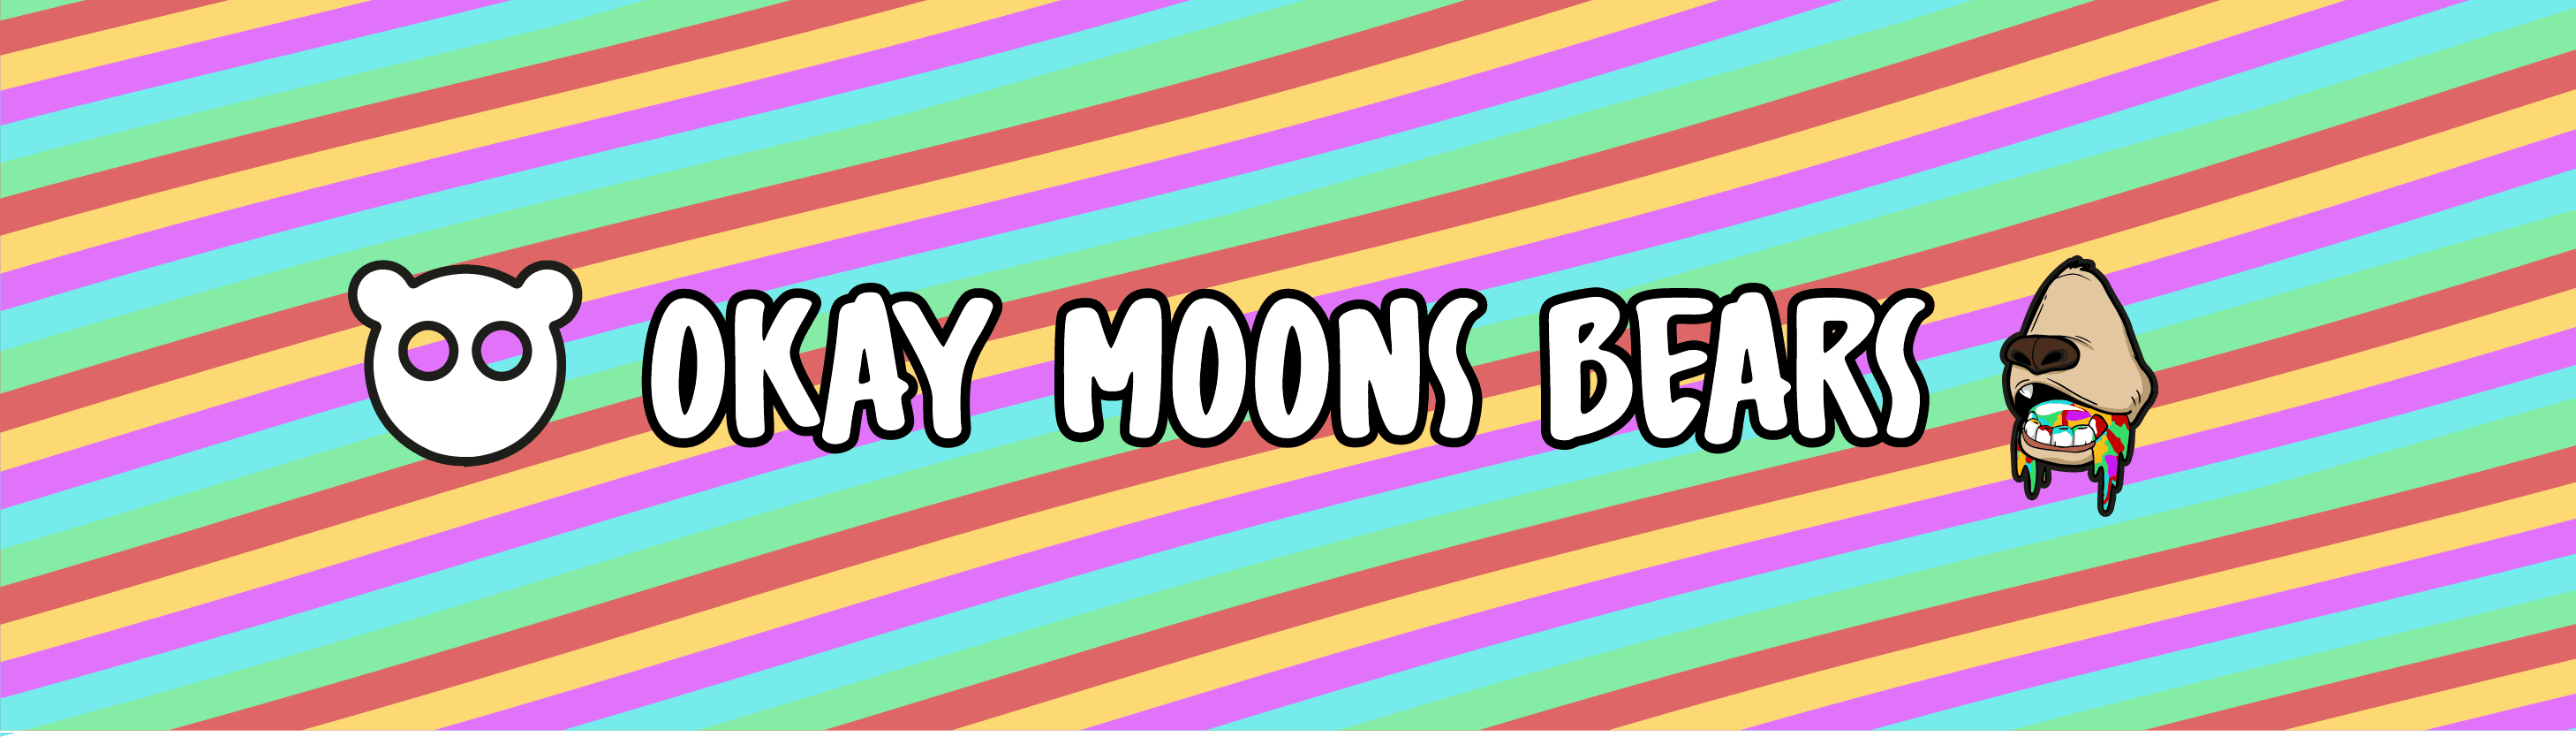 Okay-Moon-Bears banner